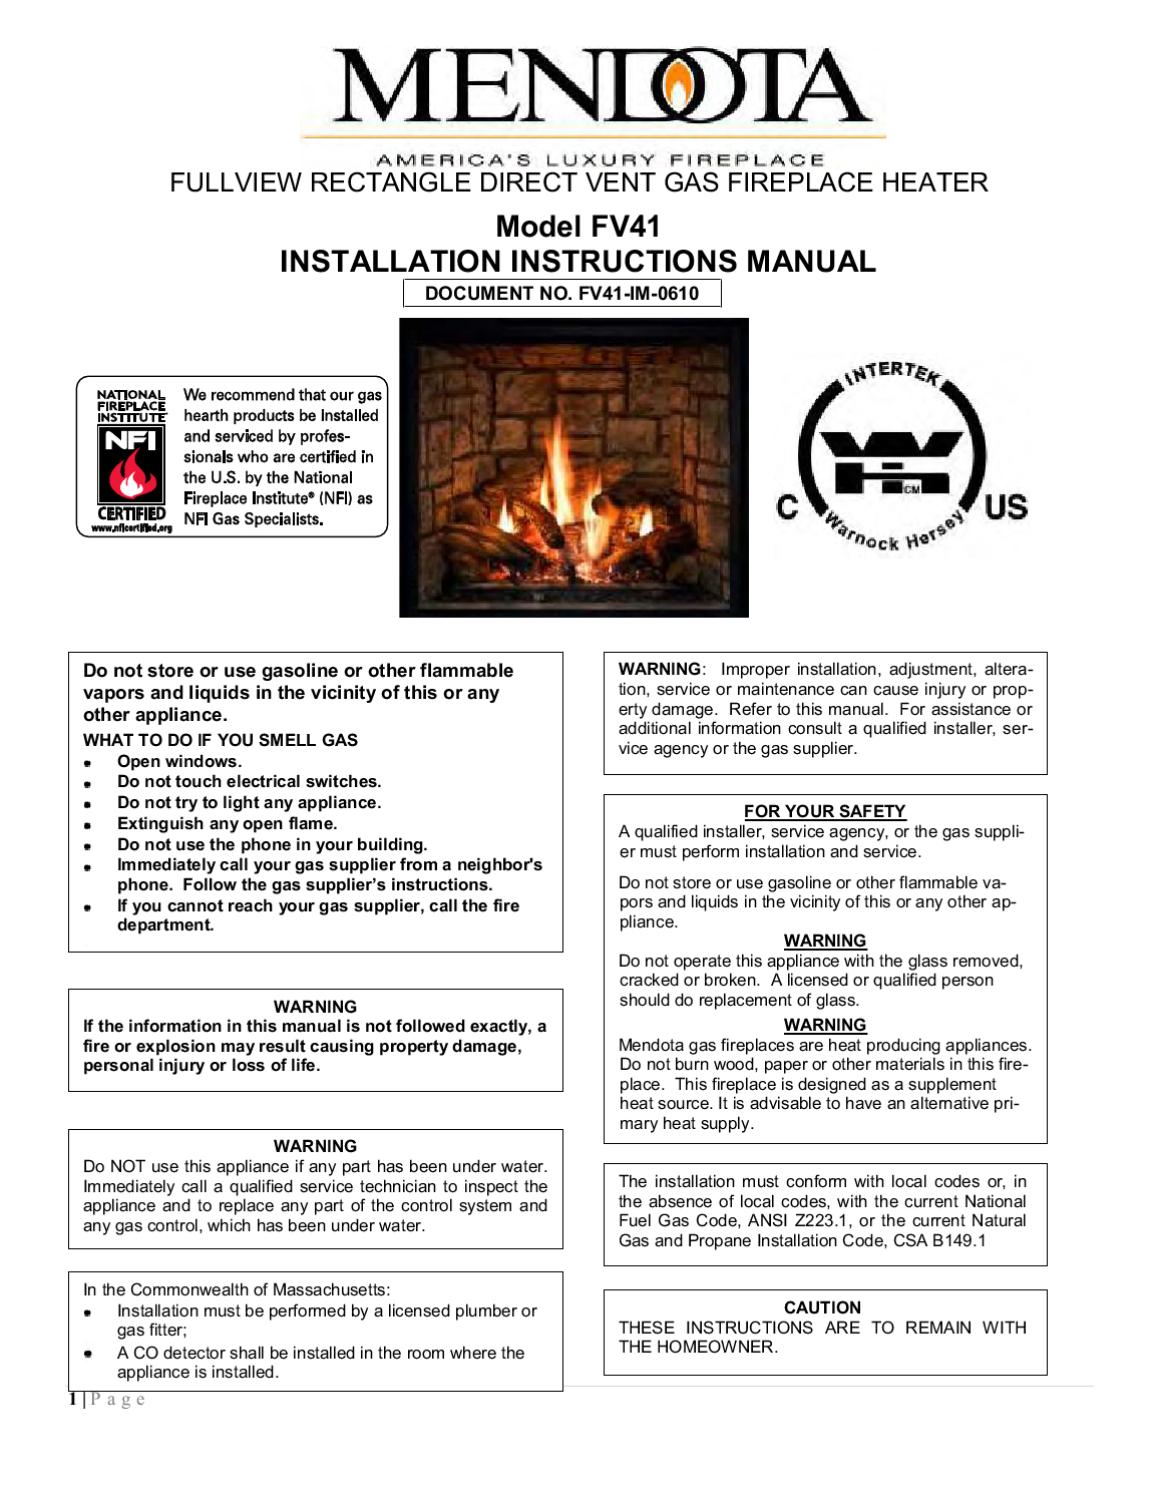 Mendota Fireplace Parts Lovely Mendota Gas Fireplaces by Smoke Fire issuu